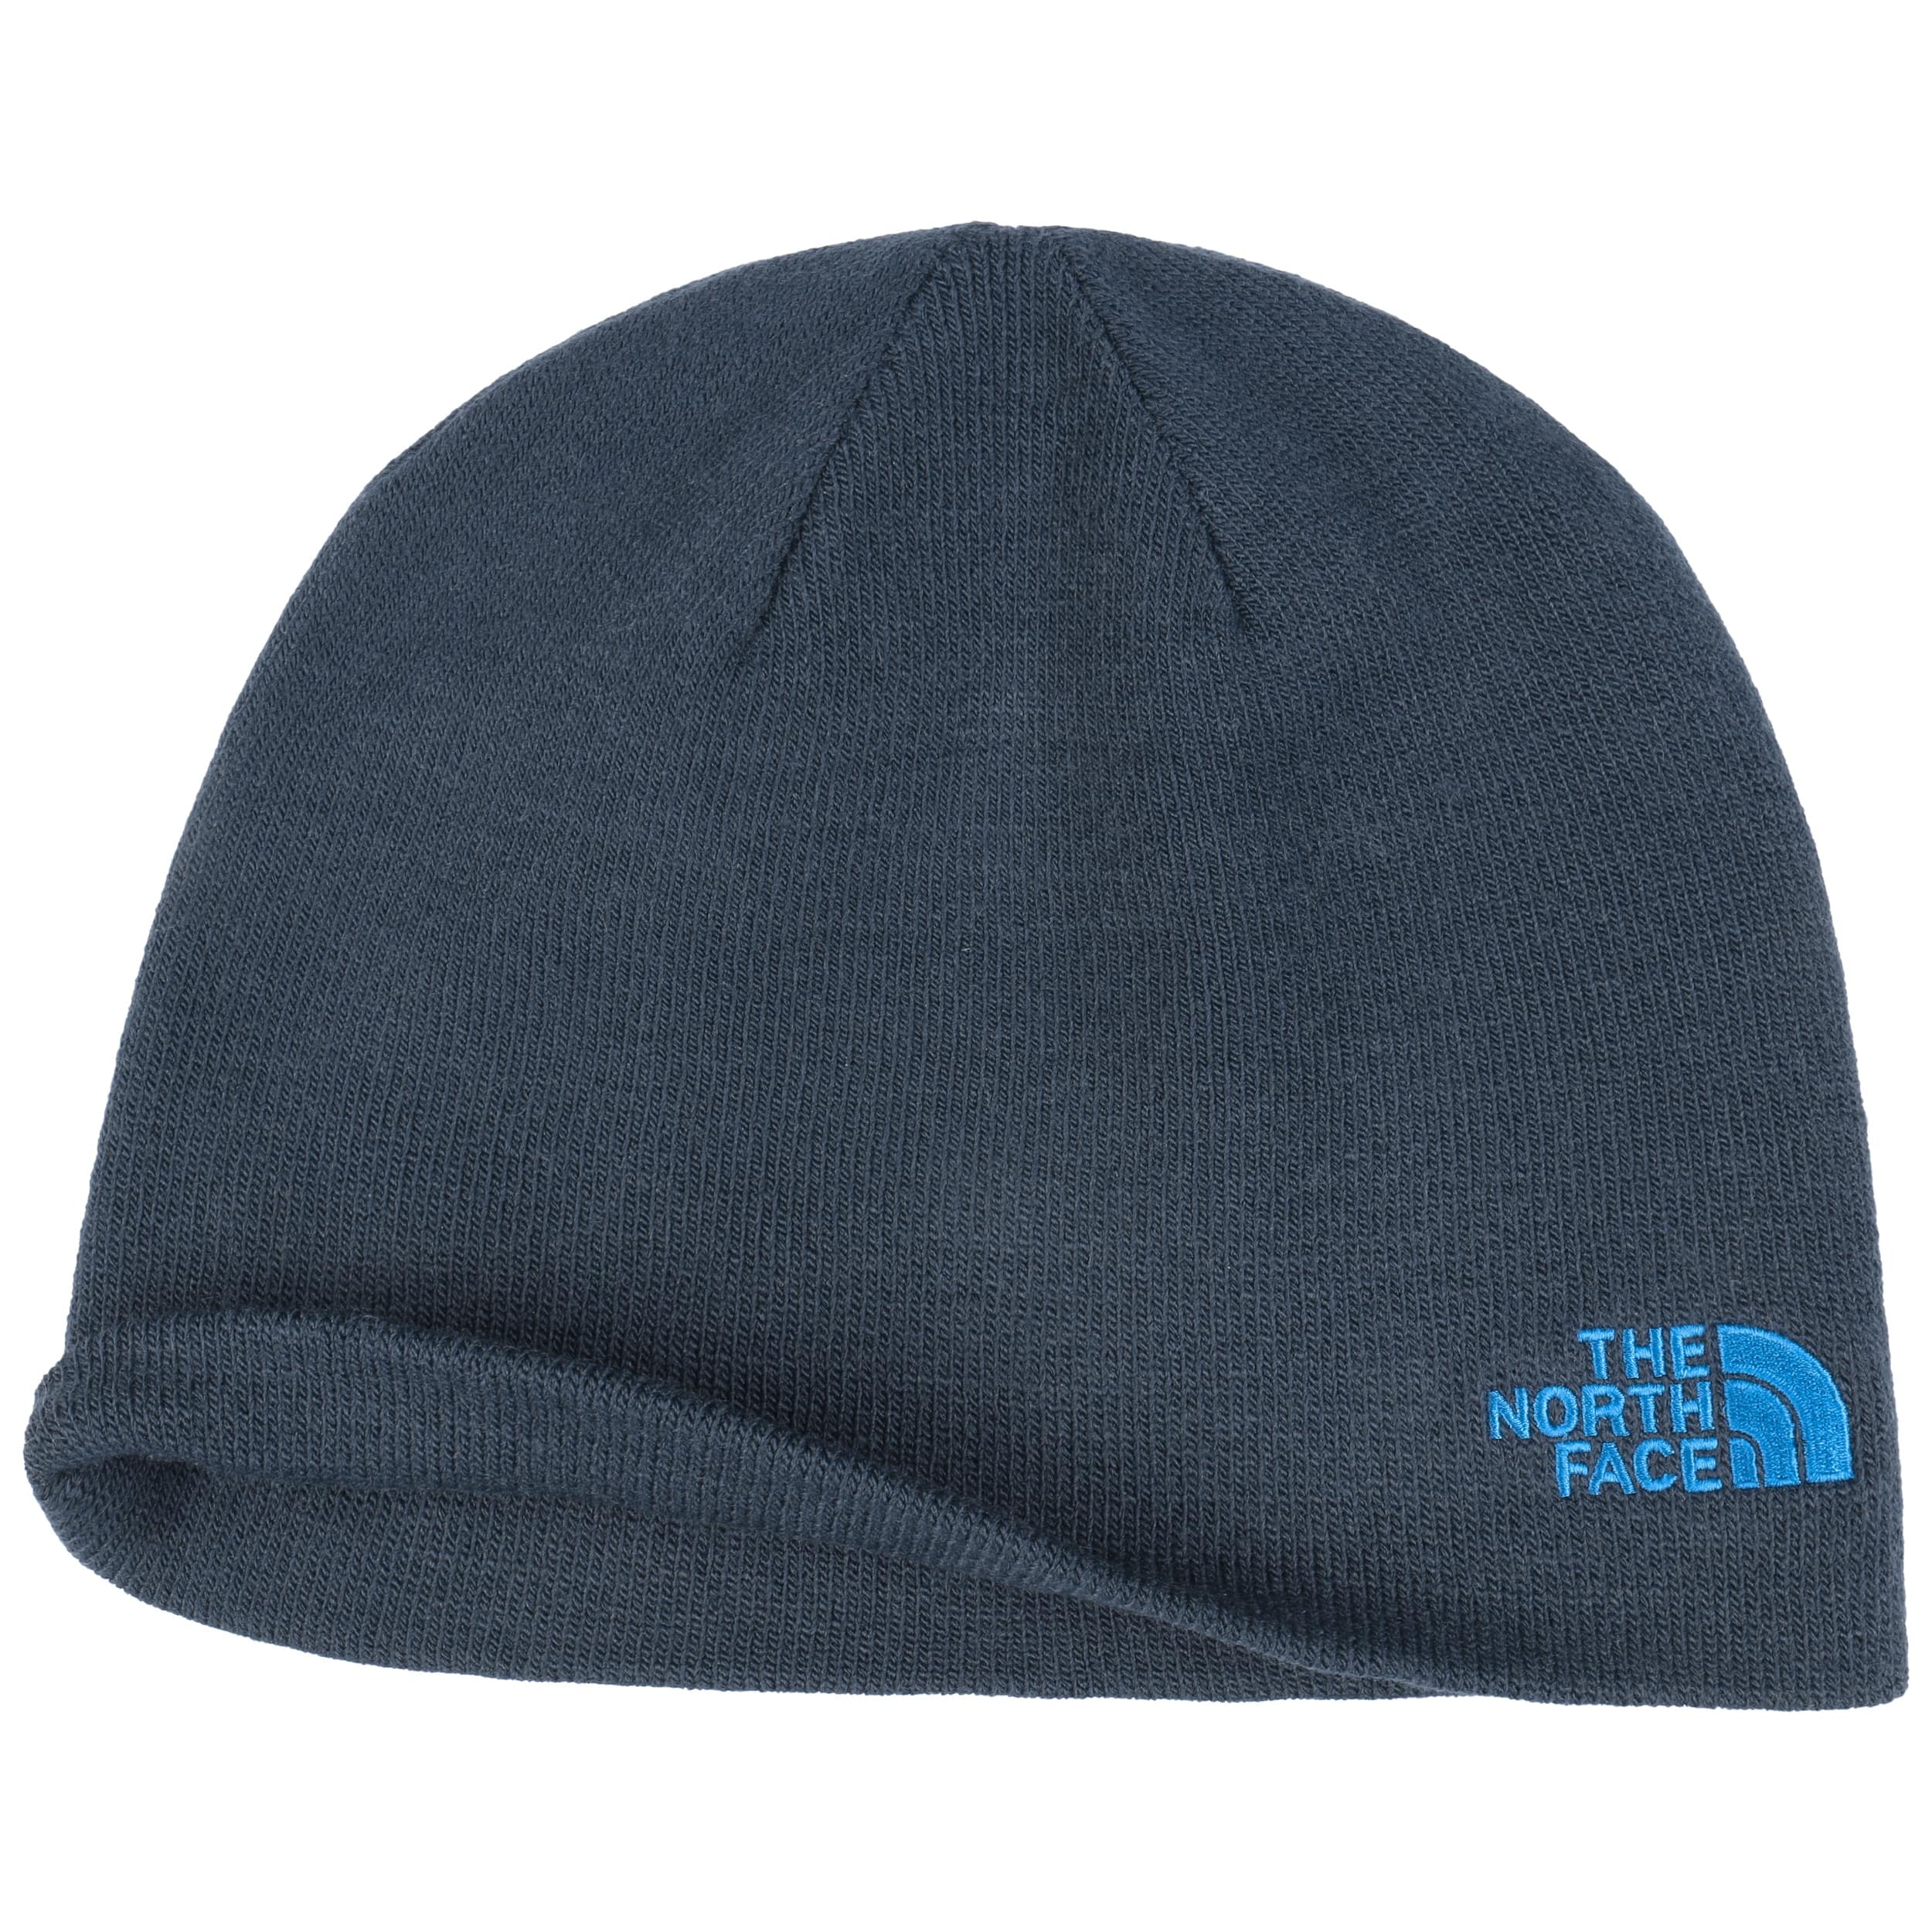 north face blue beanie hat